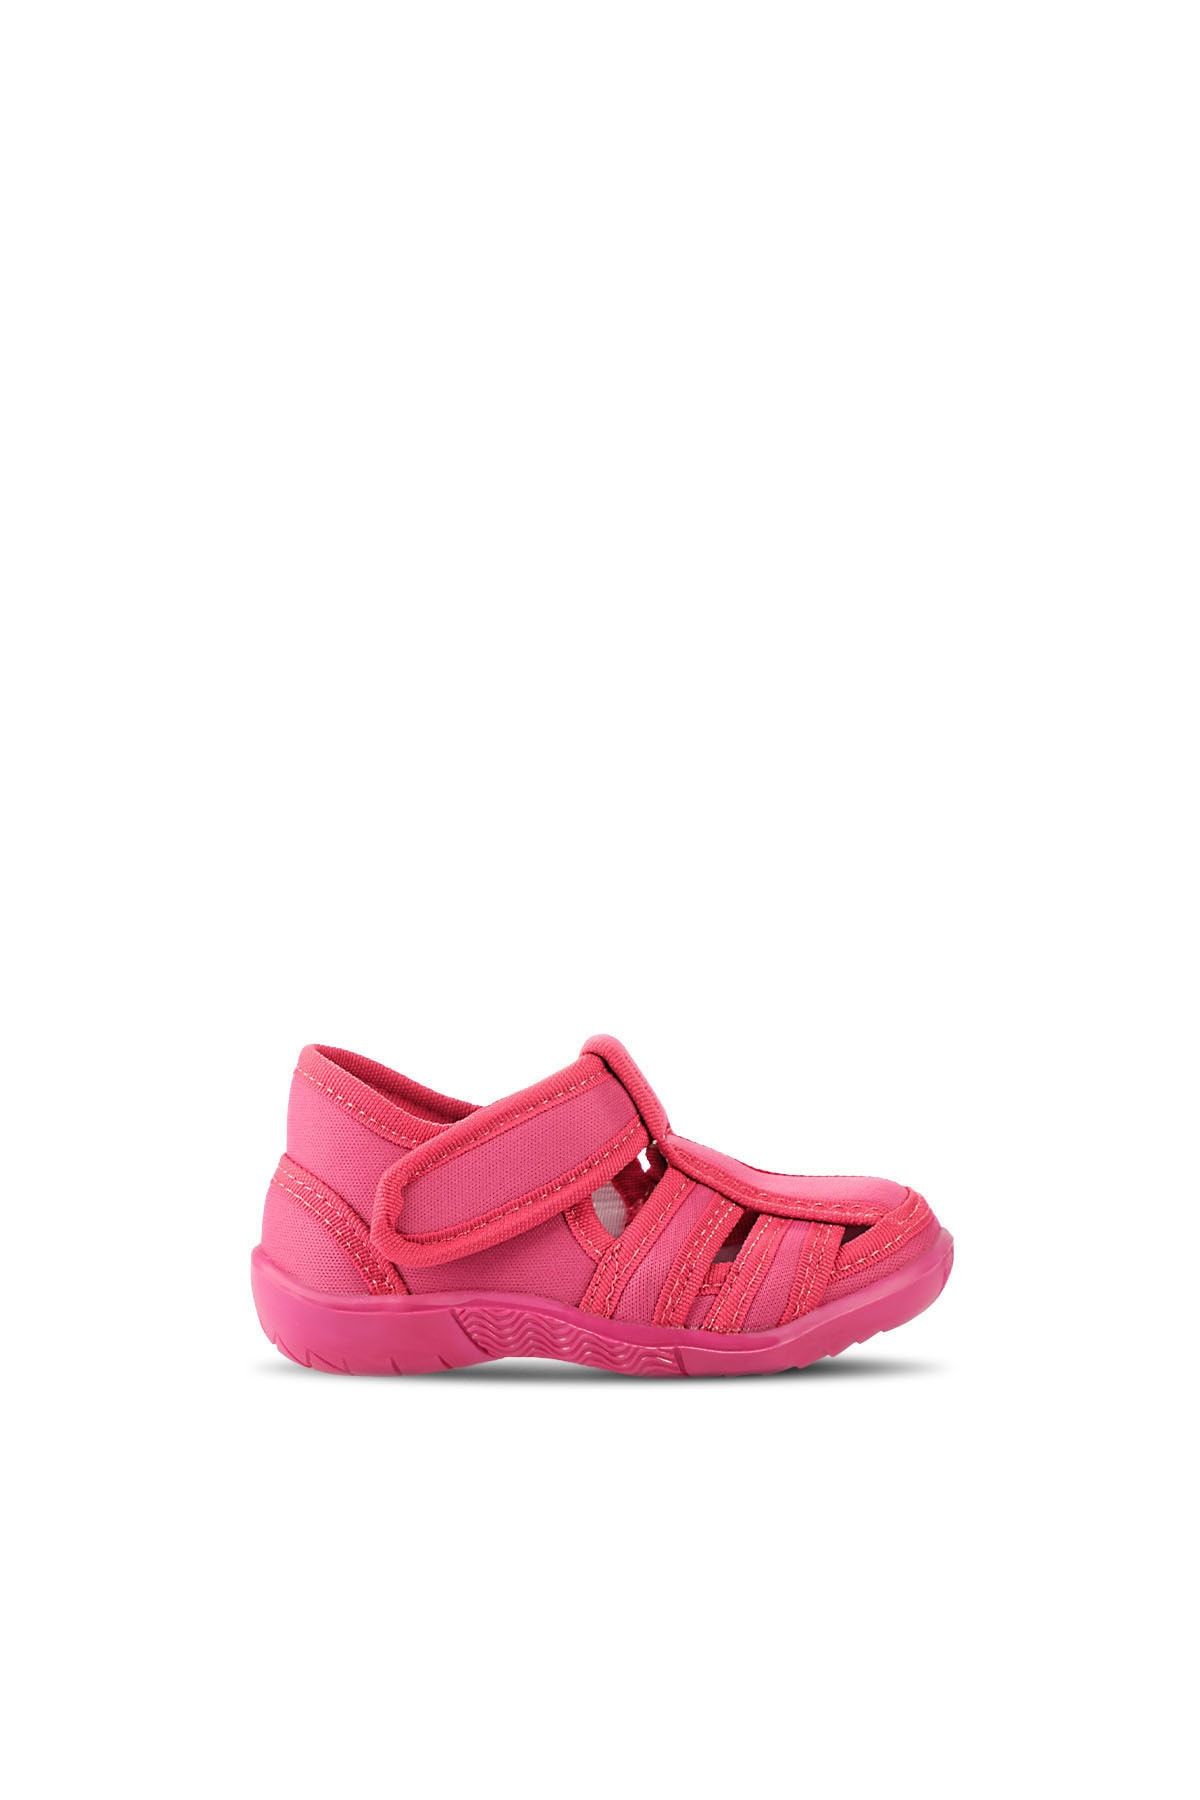 Slazenger کفش دختران ورزشی اوزی Fuchsia